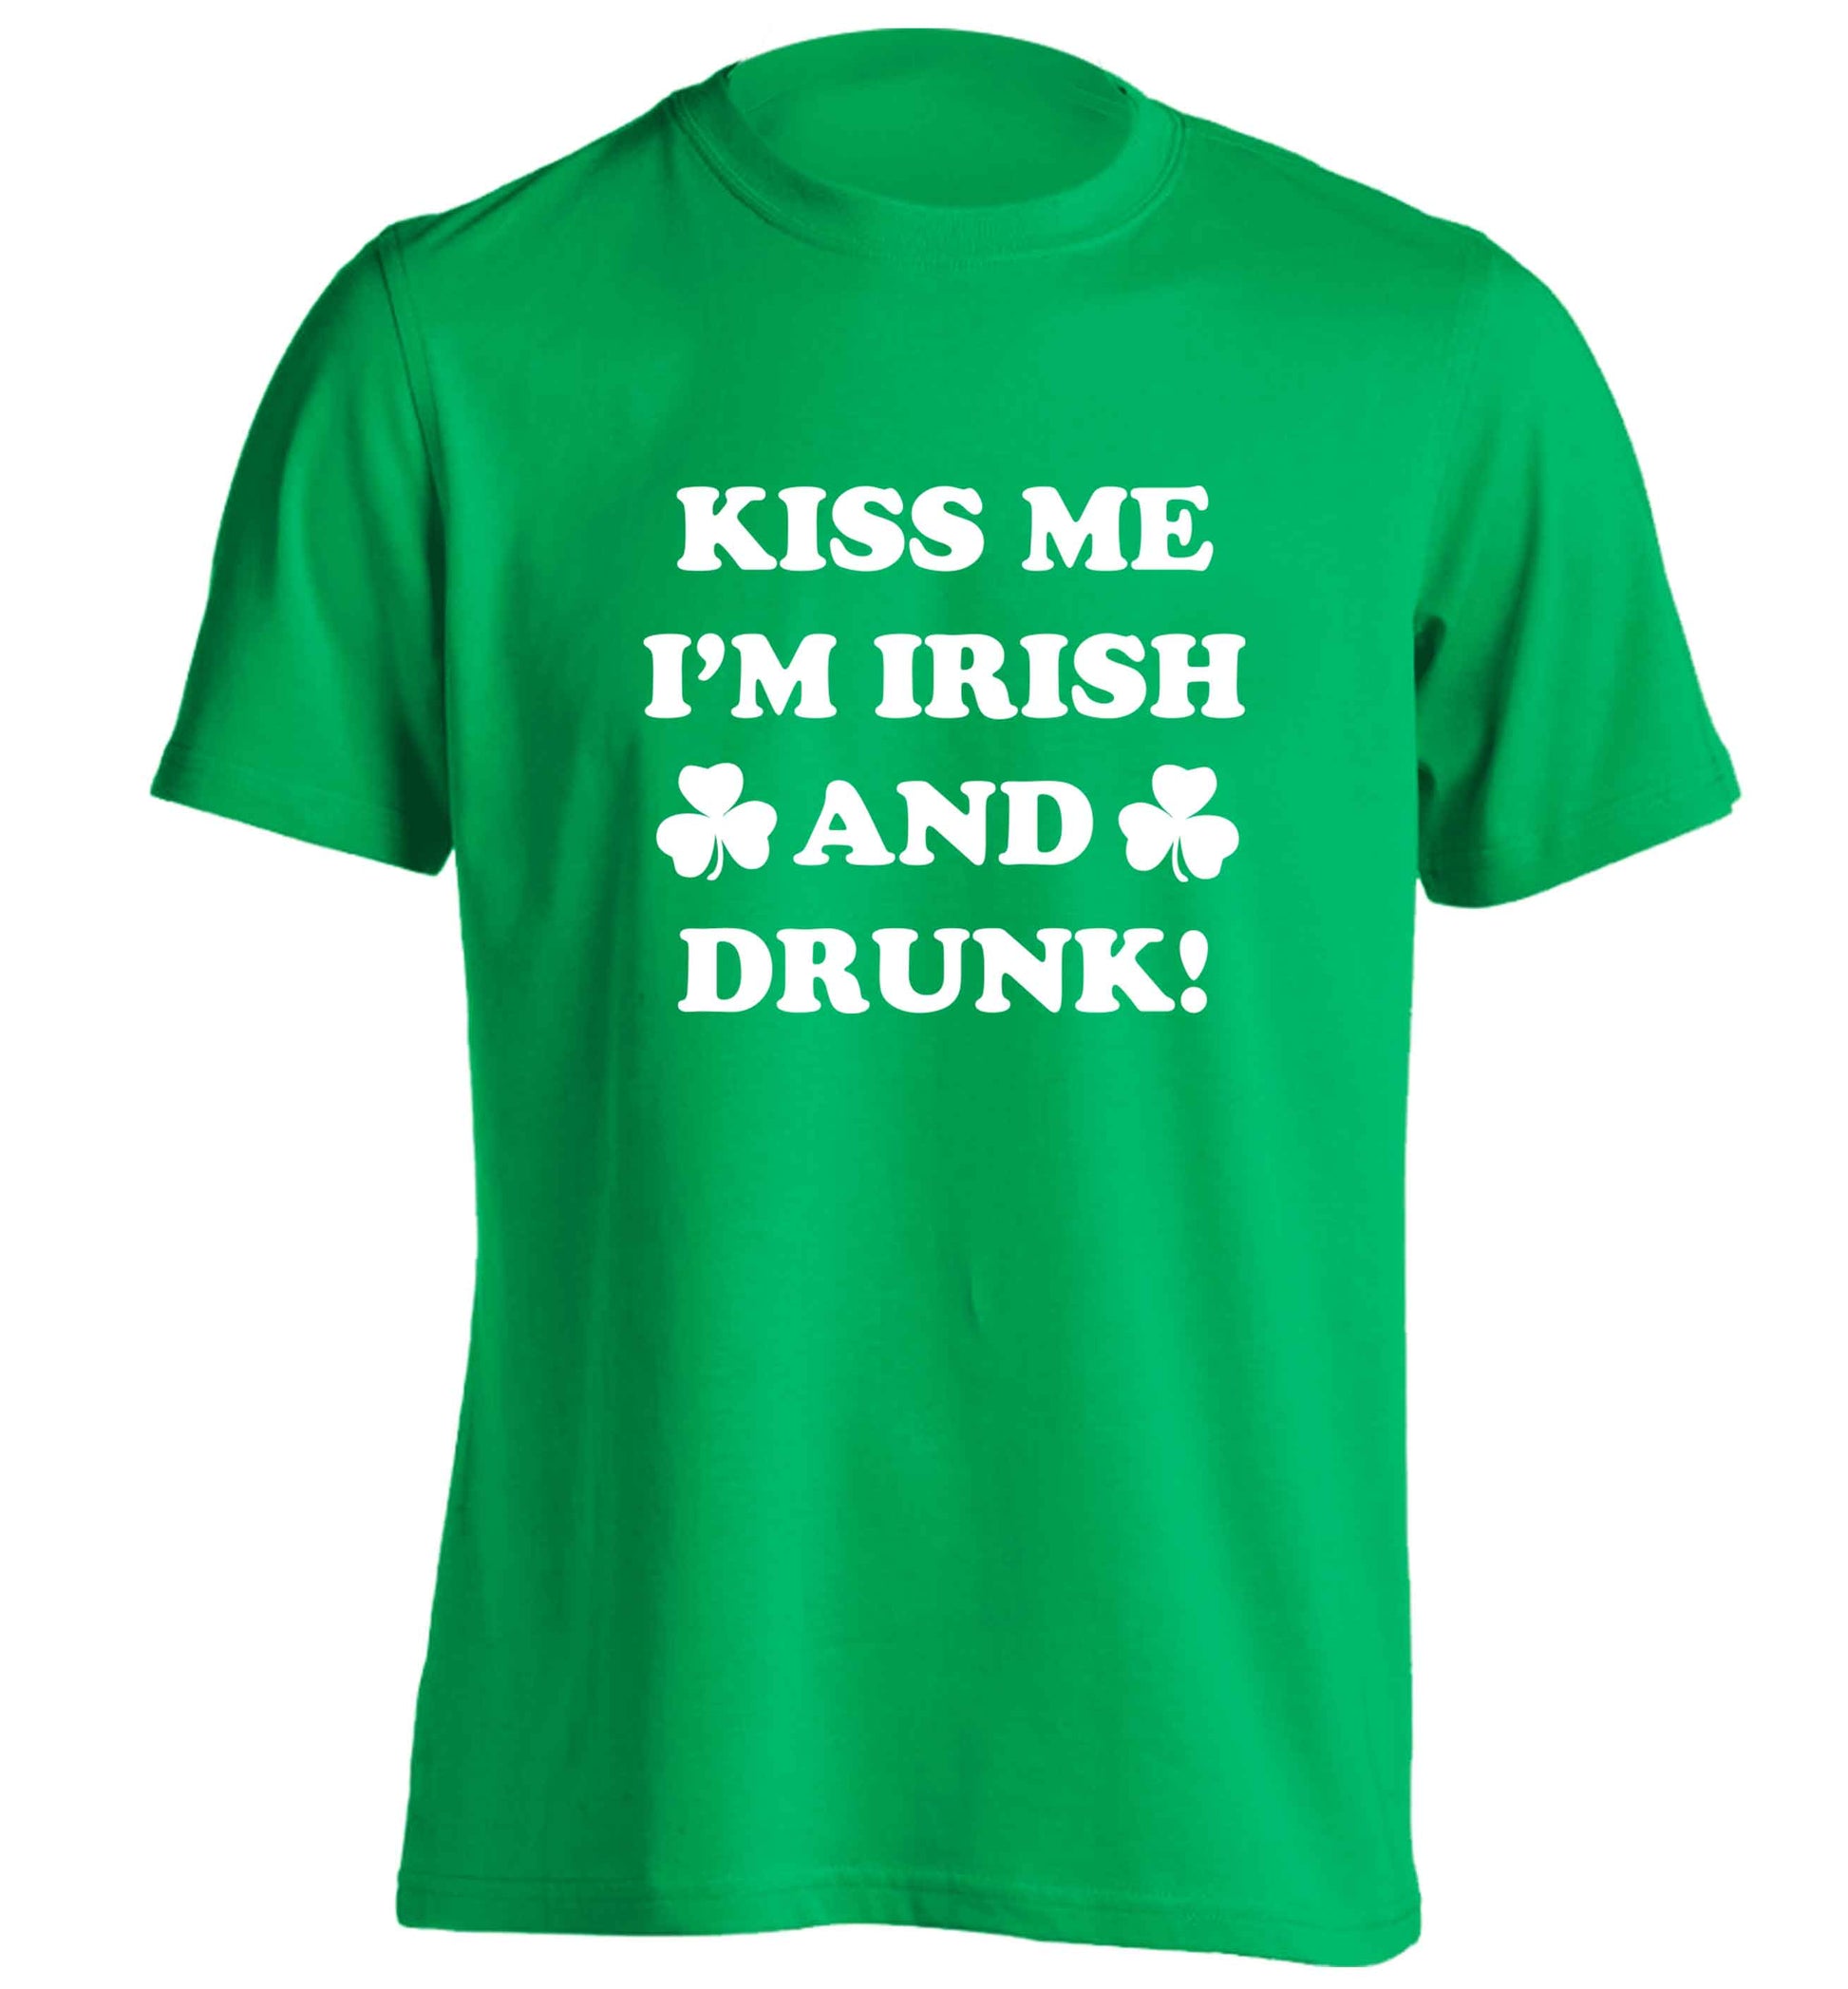 Kiss me I'm Irish and drunk adults unisex green Tshirt 2XL